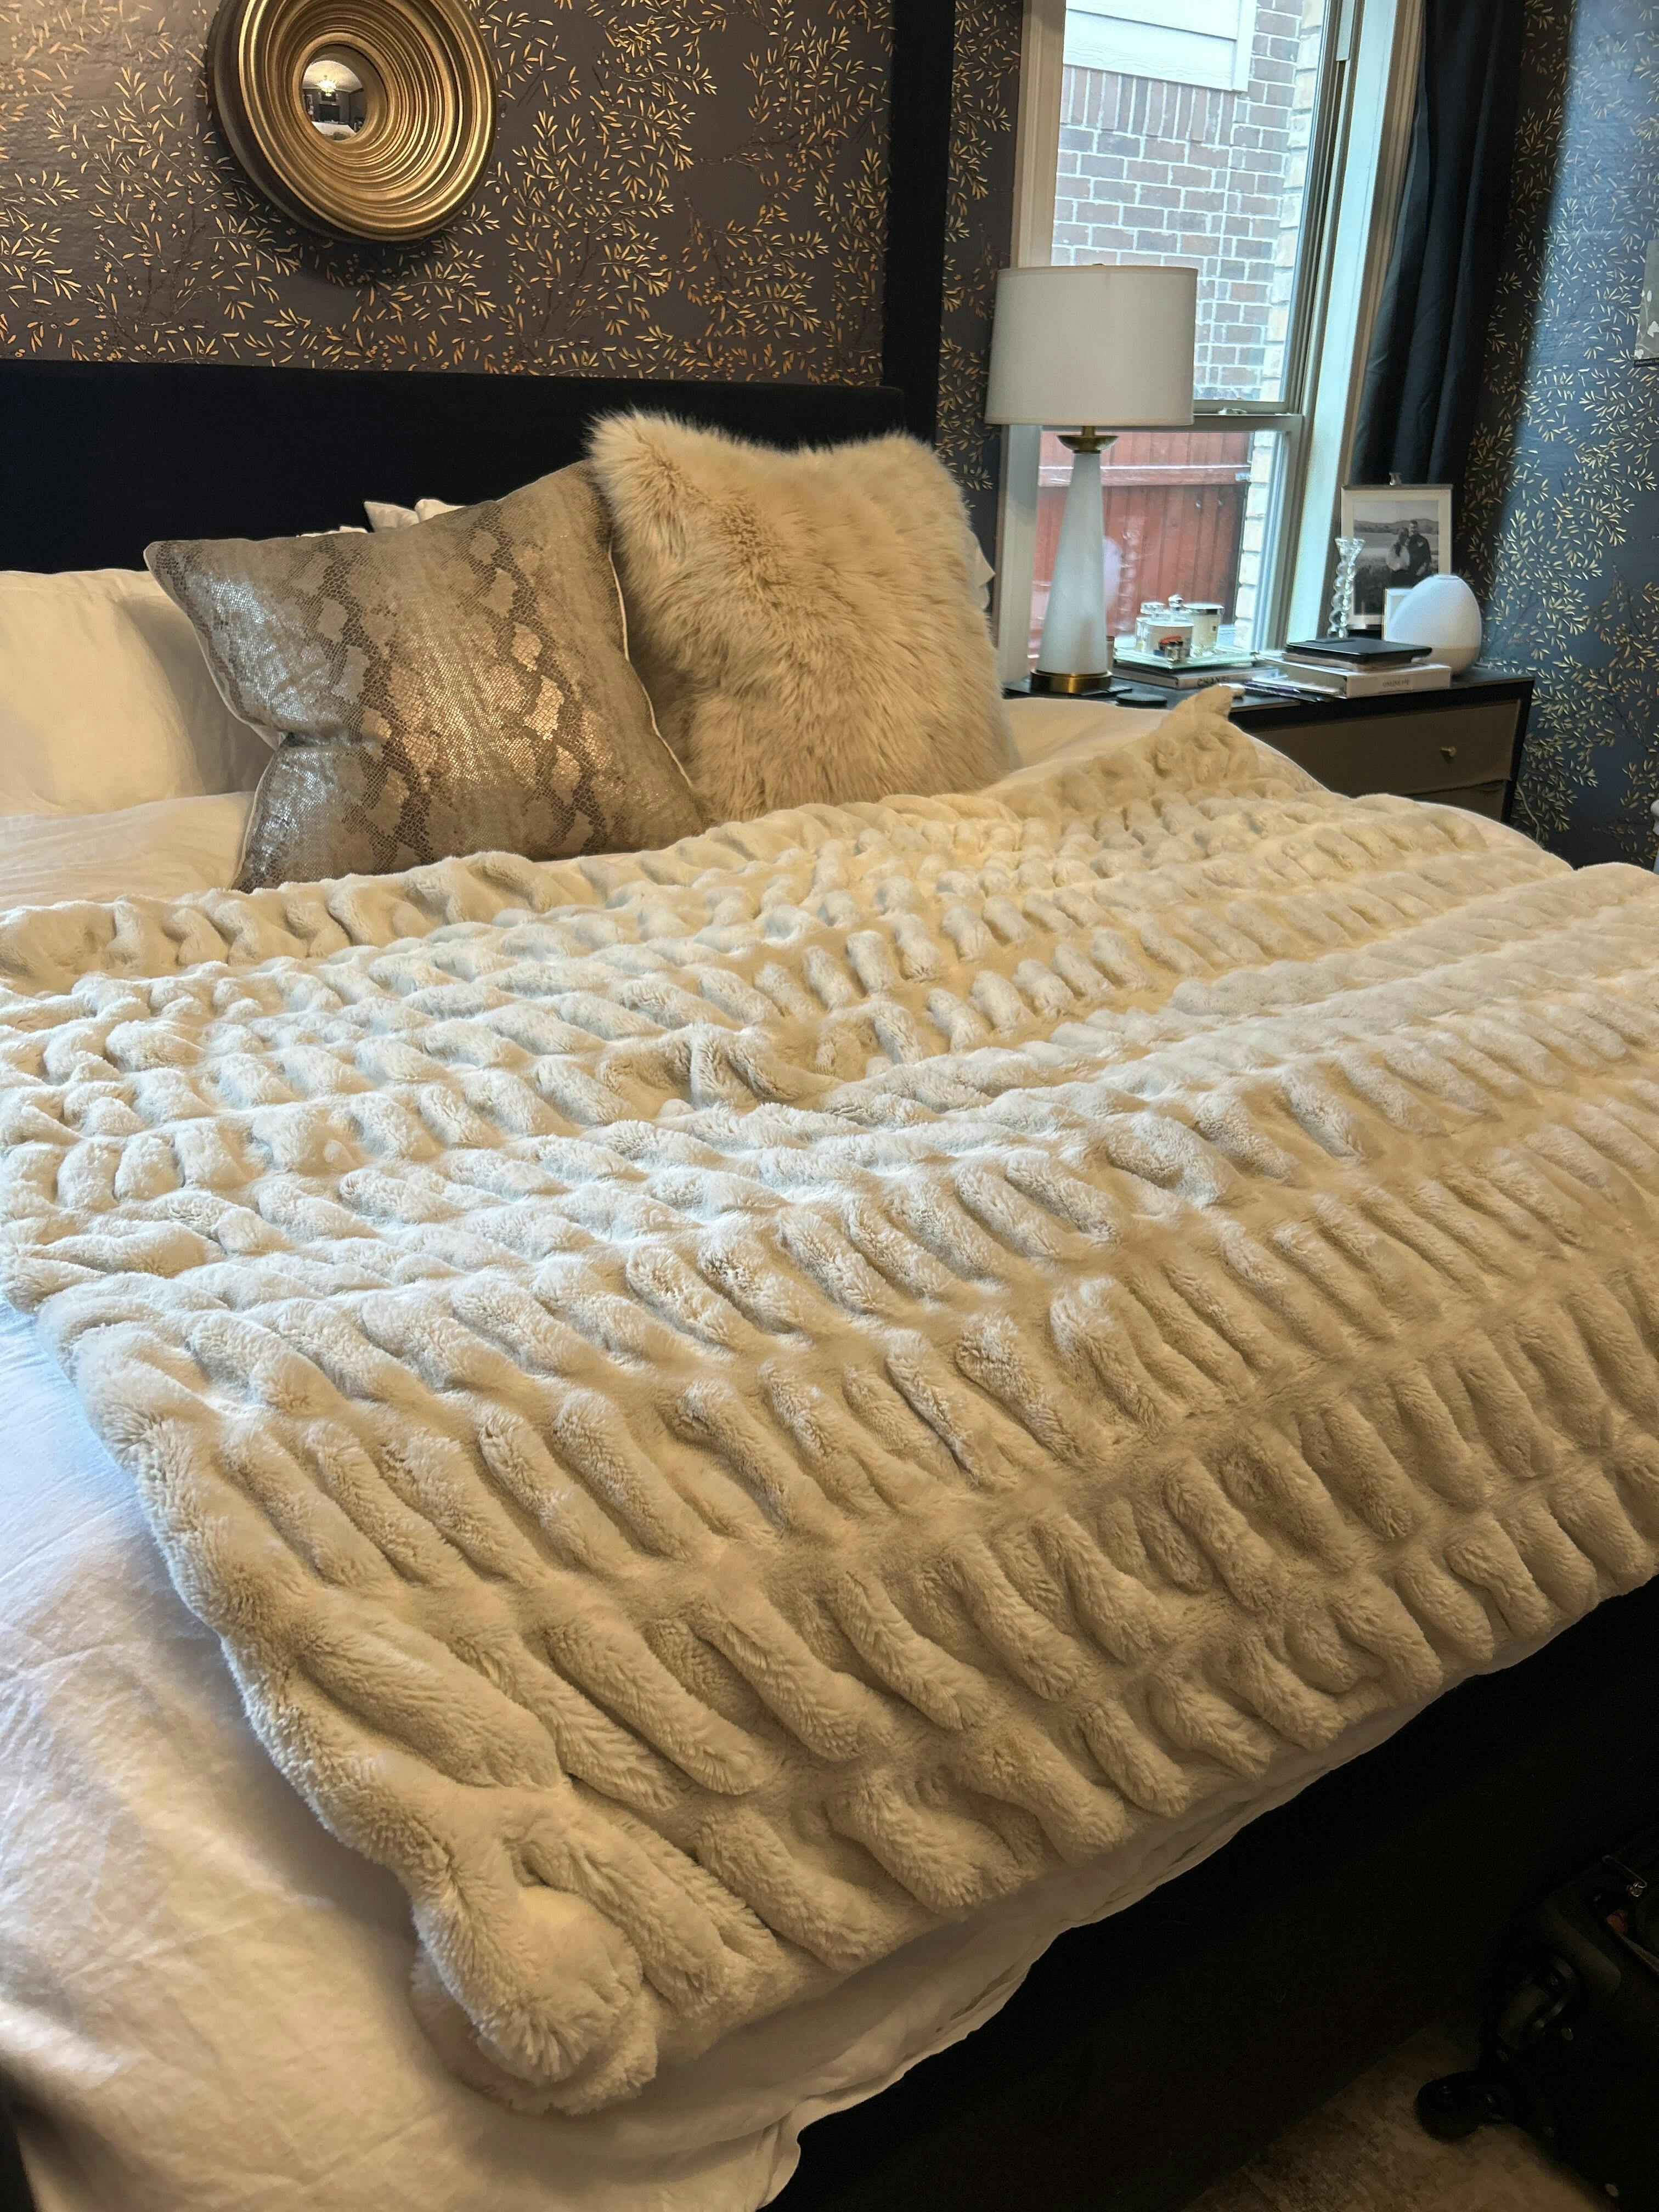 GC GAVENO CAVAILIA Mink Fur Throws For Beds, Throw Blanket, Soft